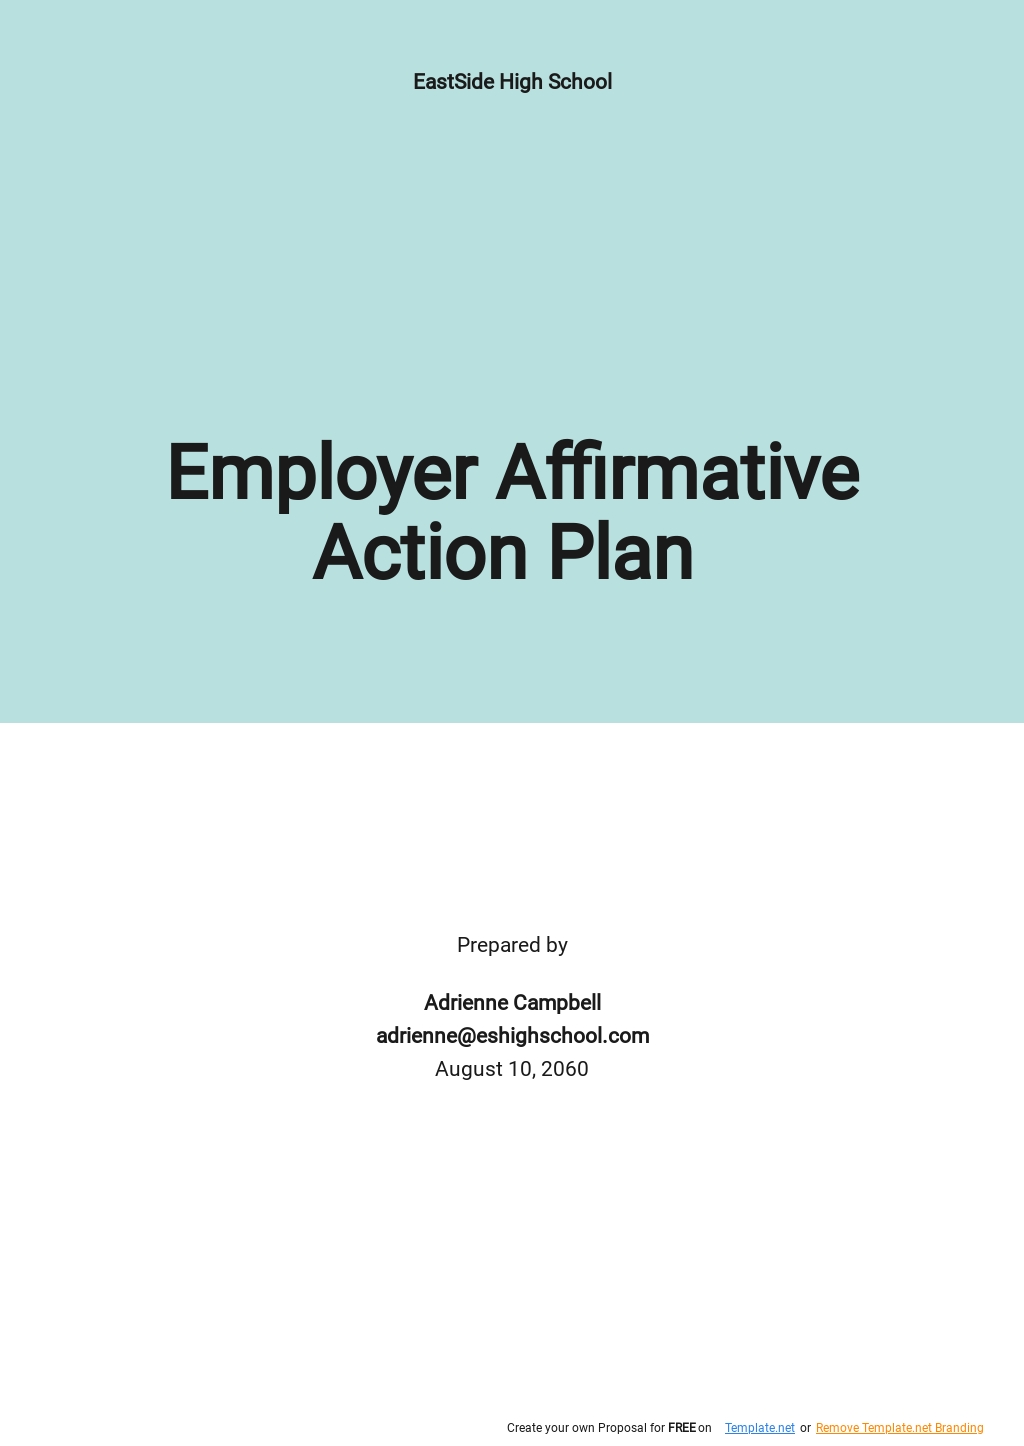 Employer Affirmative Action Plan Template .jpe